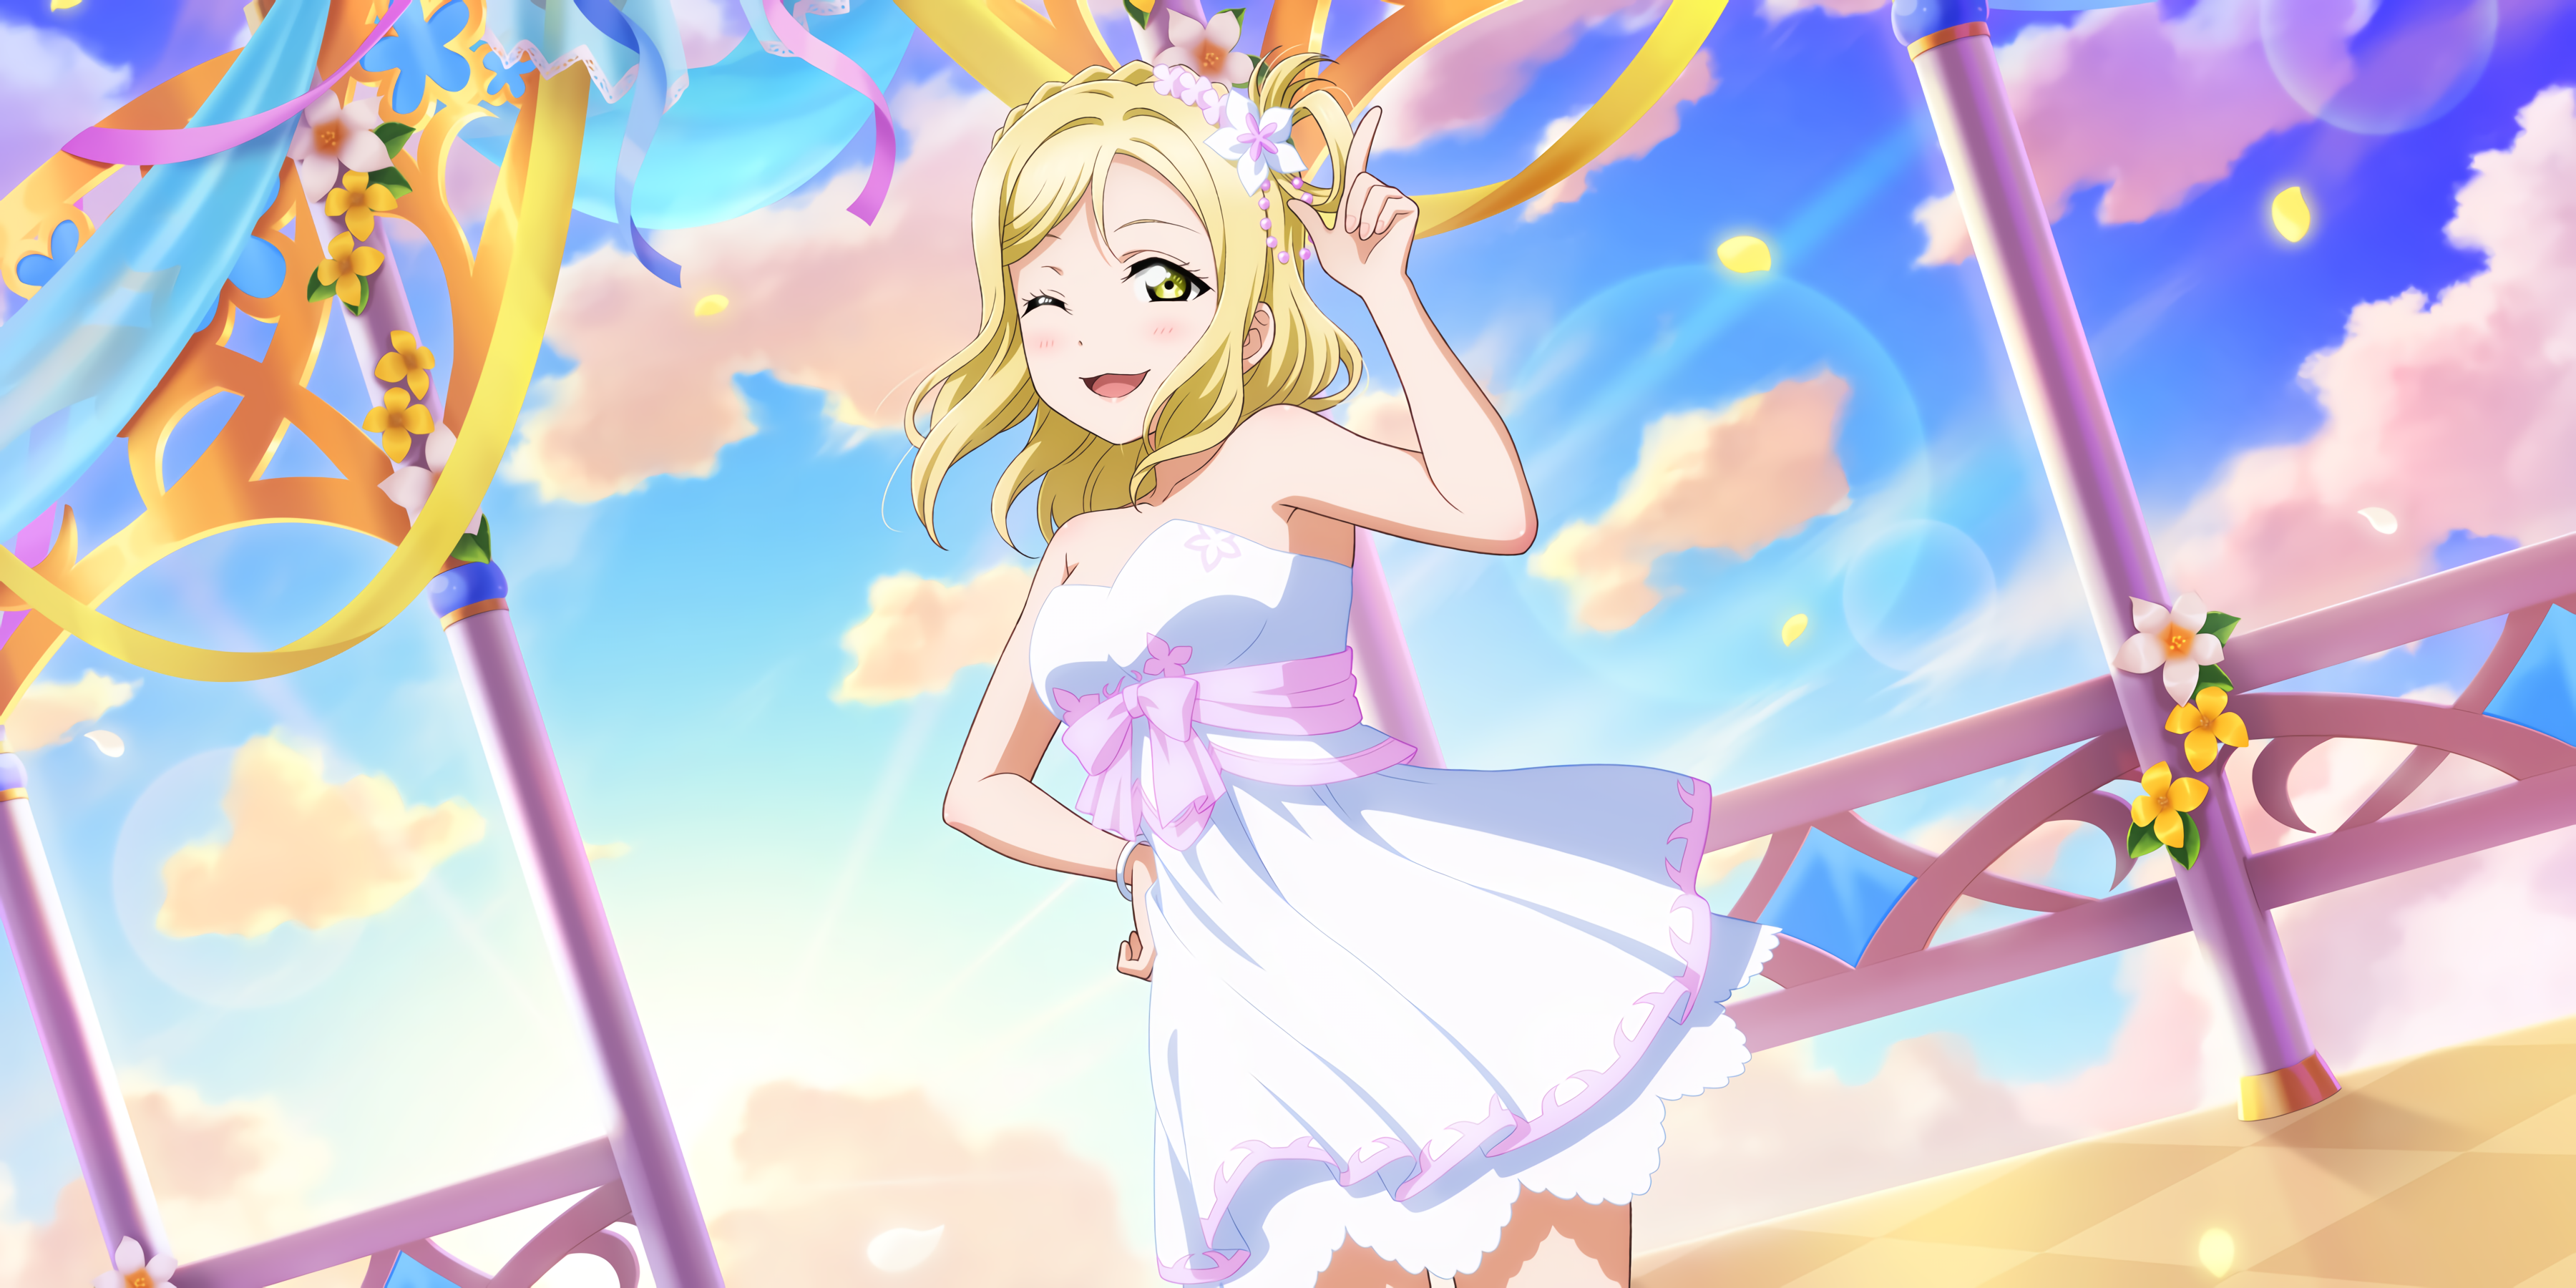 Anime 3600x1800 Ohara Mari Love Live! Sunshine Love Live! anime anime girls wink blonde flowers